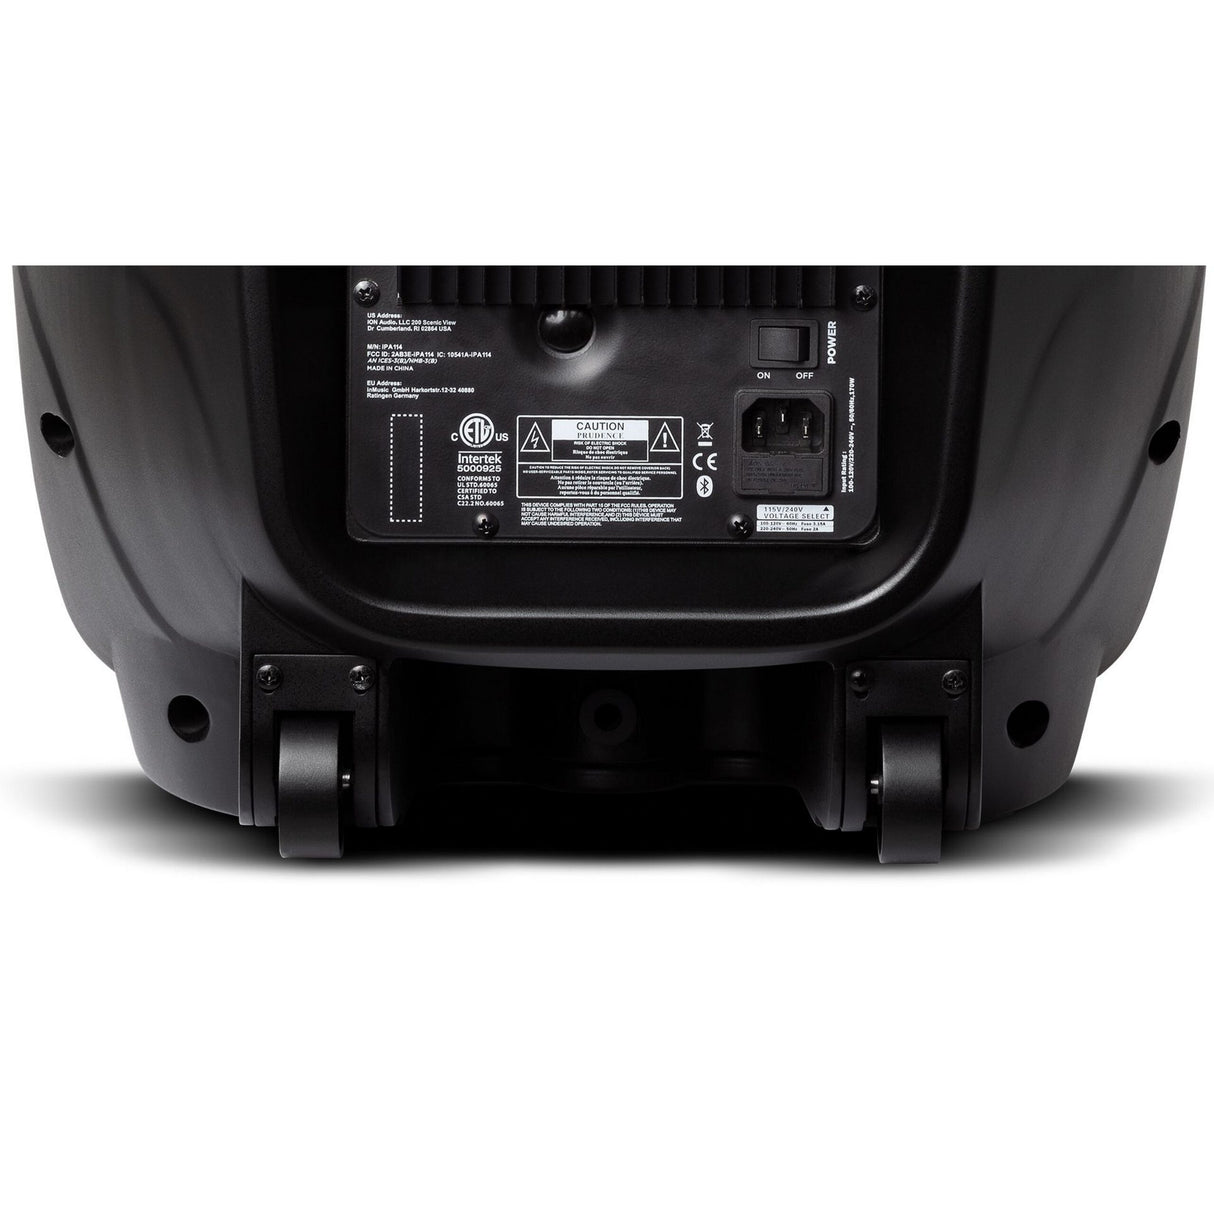 ION Audio Pro Glow 1500 Portable Bluetooth Speaker, Black, PROGLOW1500 